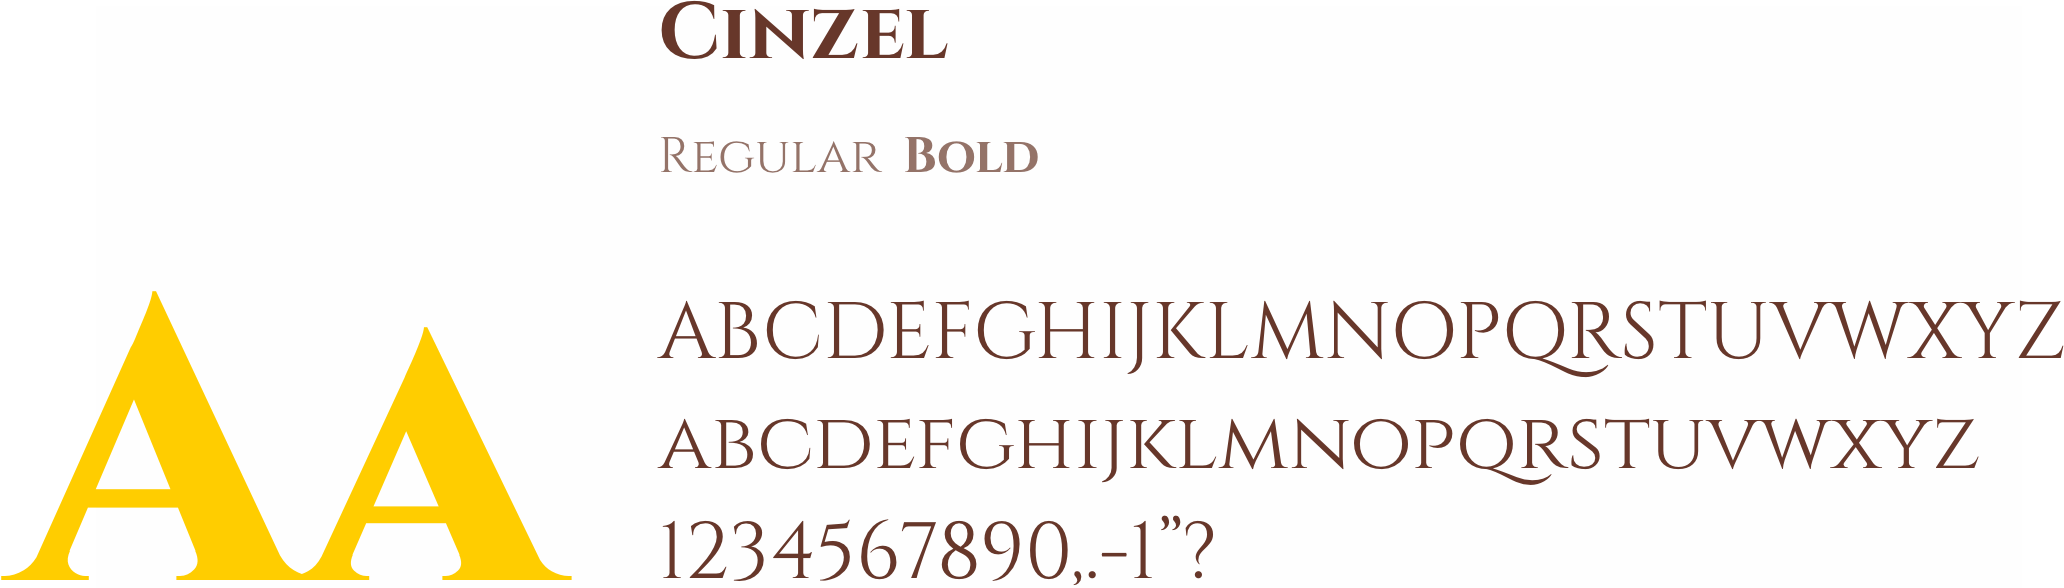 1-typeface-caffarel@2x